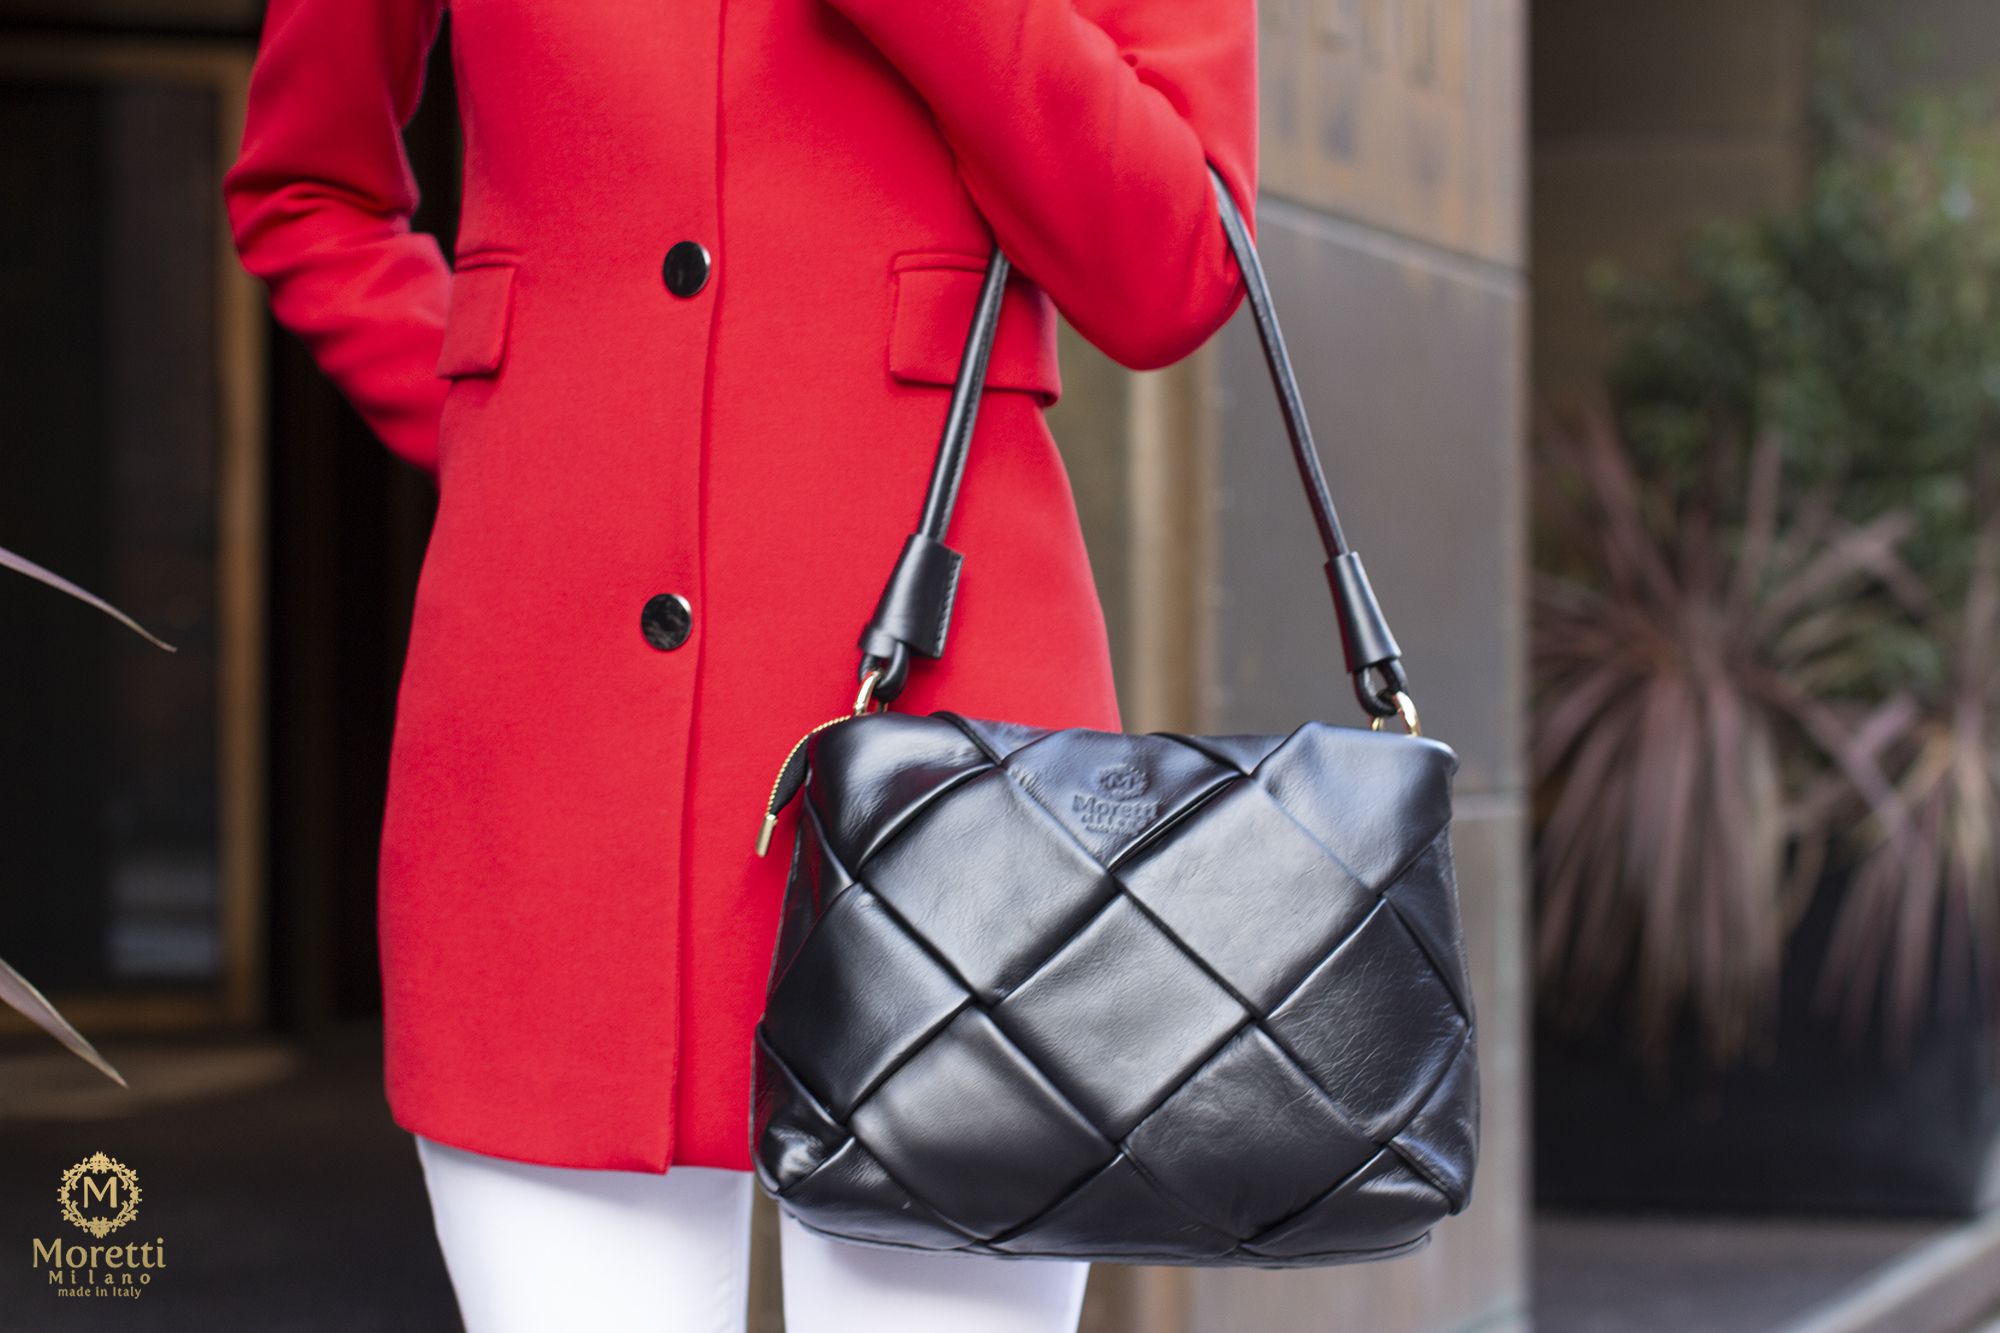 Nardo handbag in luxury leather black by Moretti Milano Italy 14495